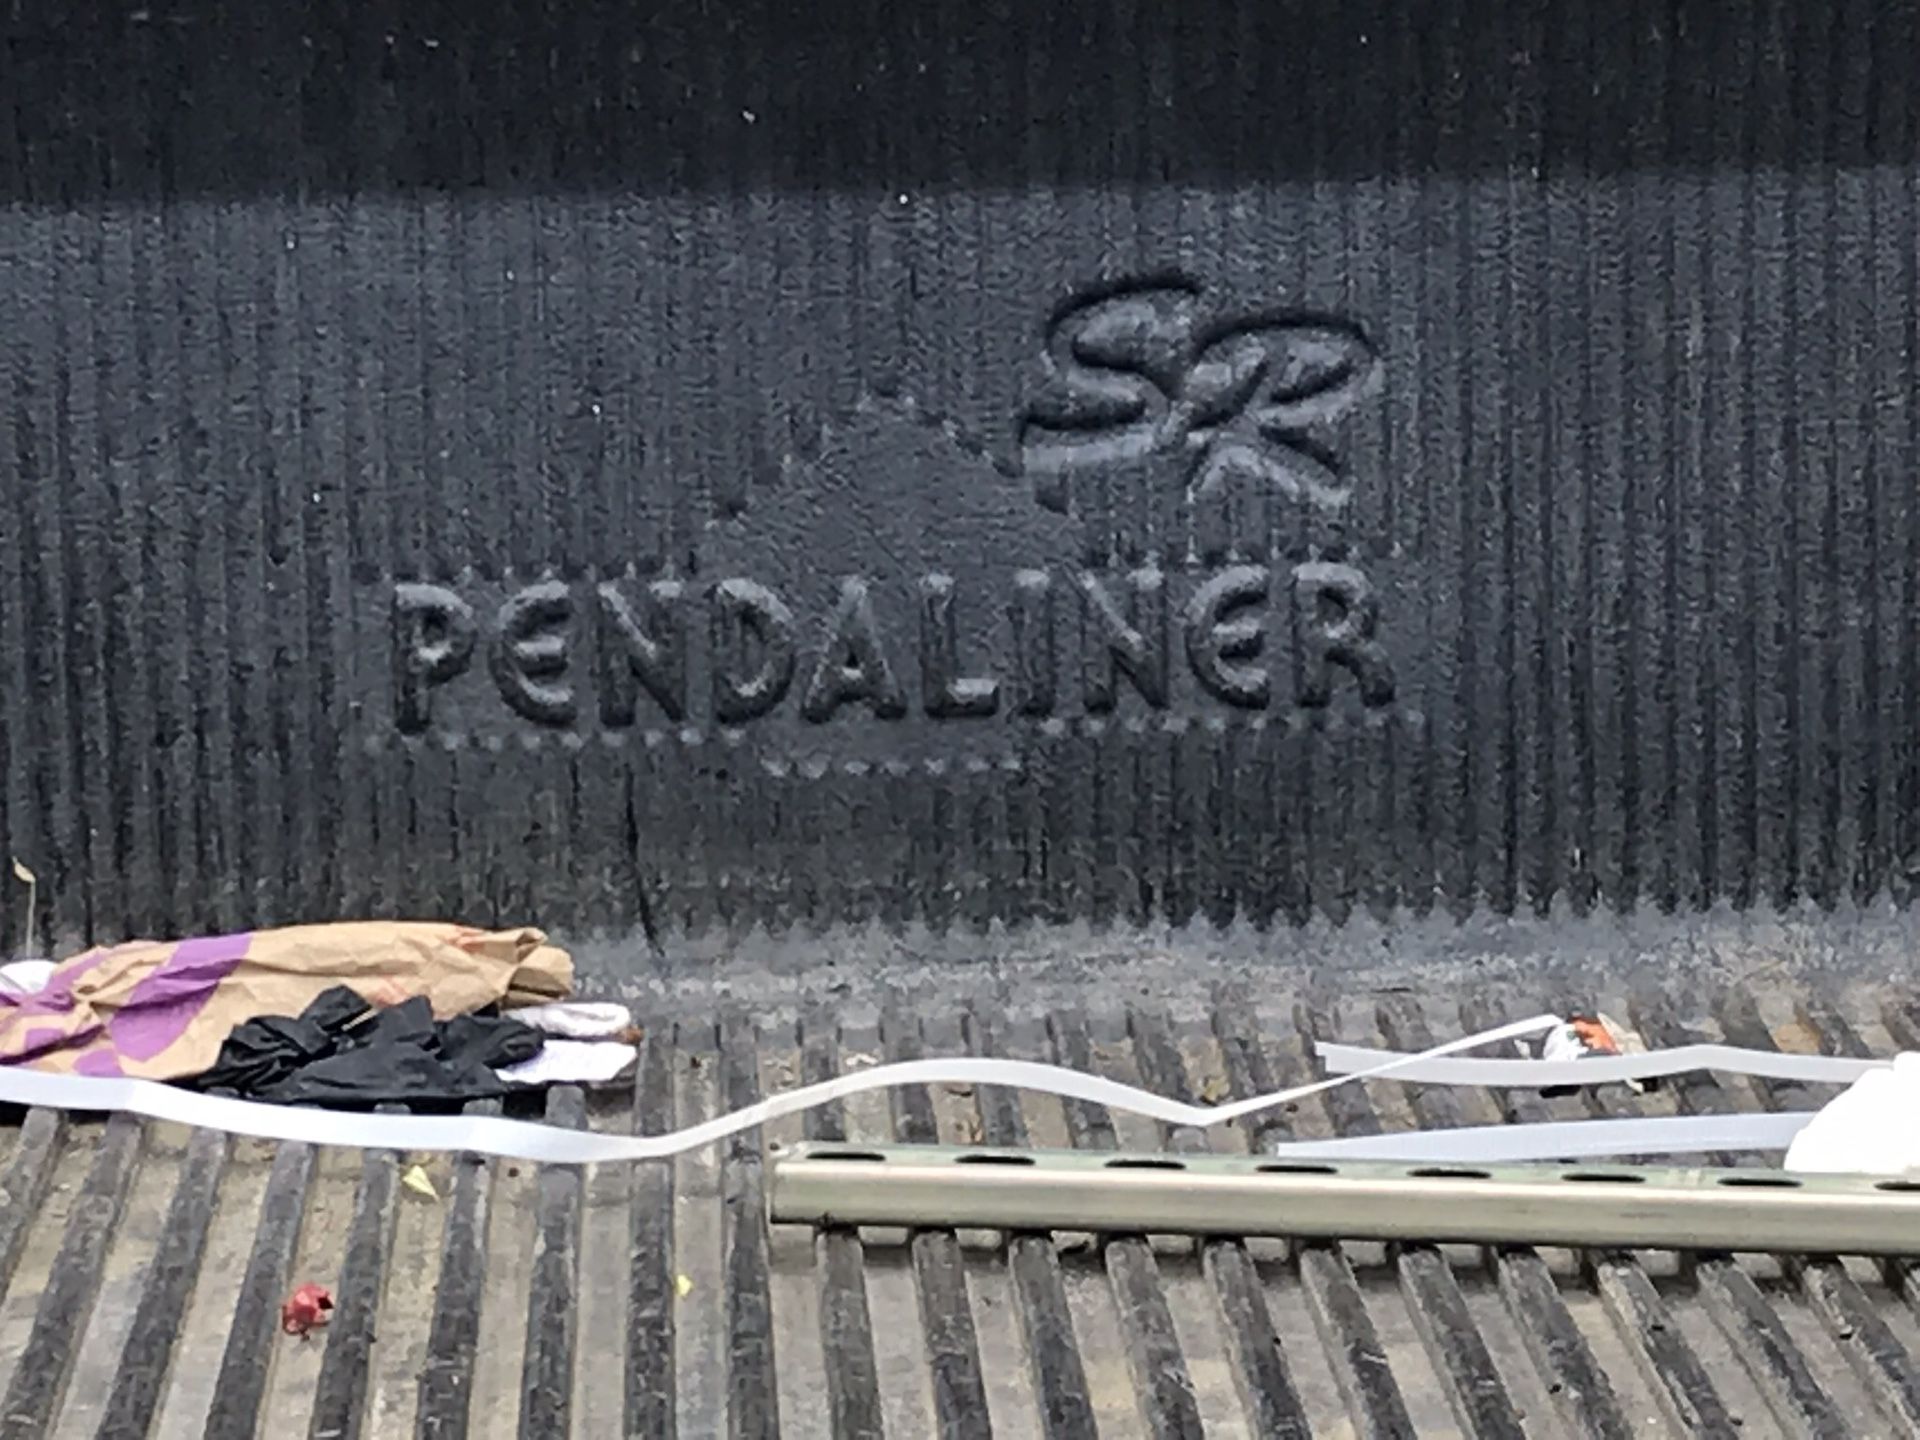 Pendaliner By SR Truck bedliner